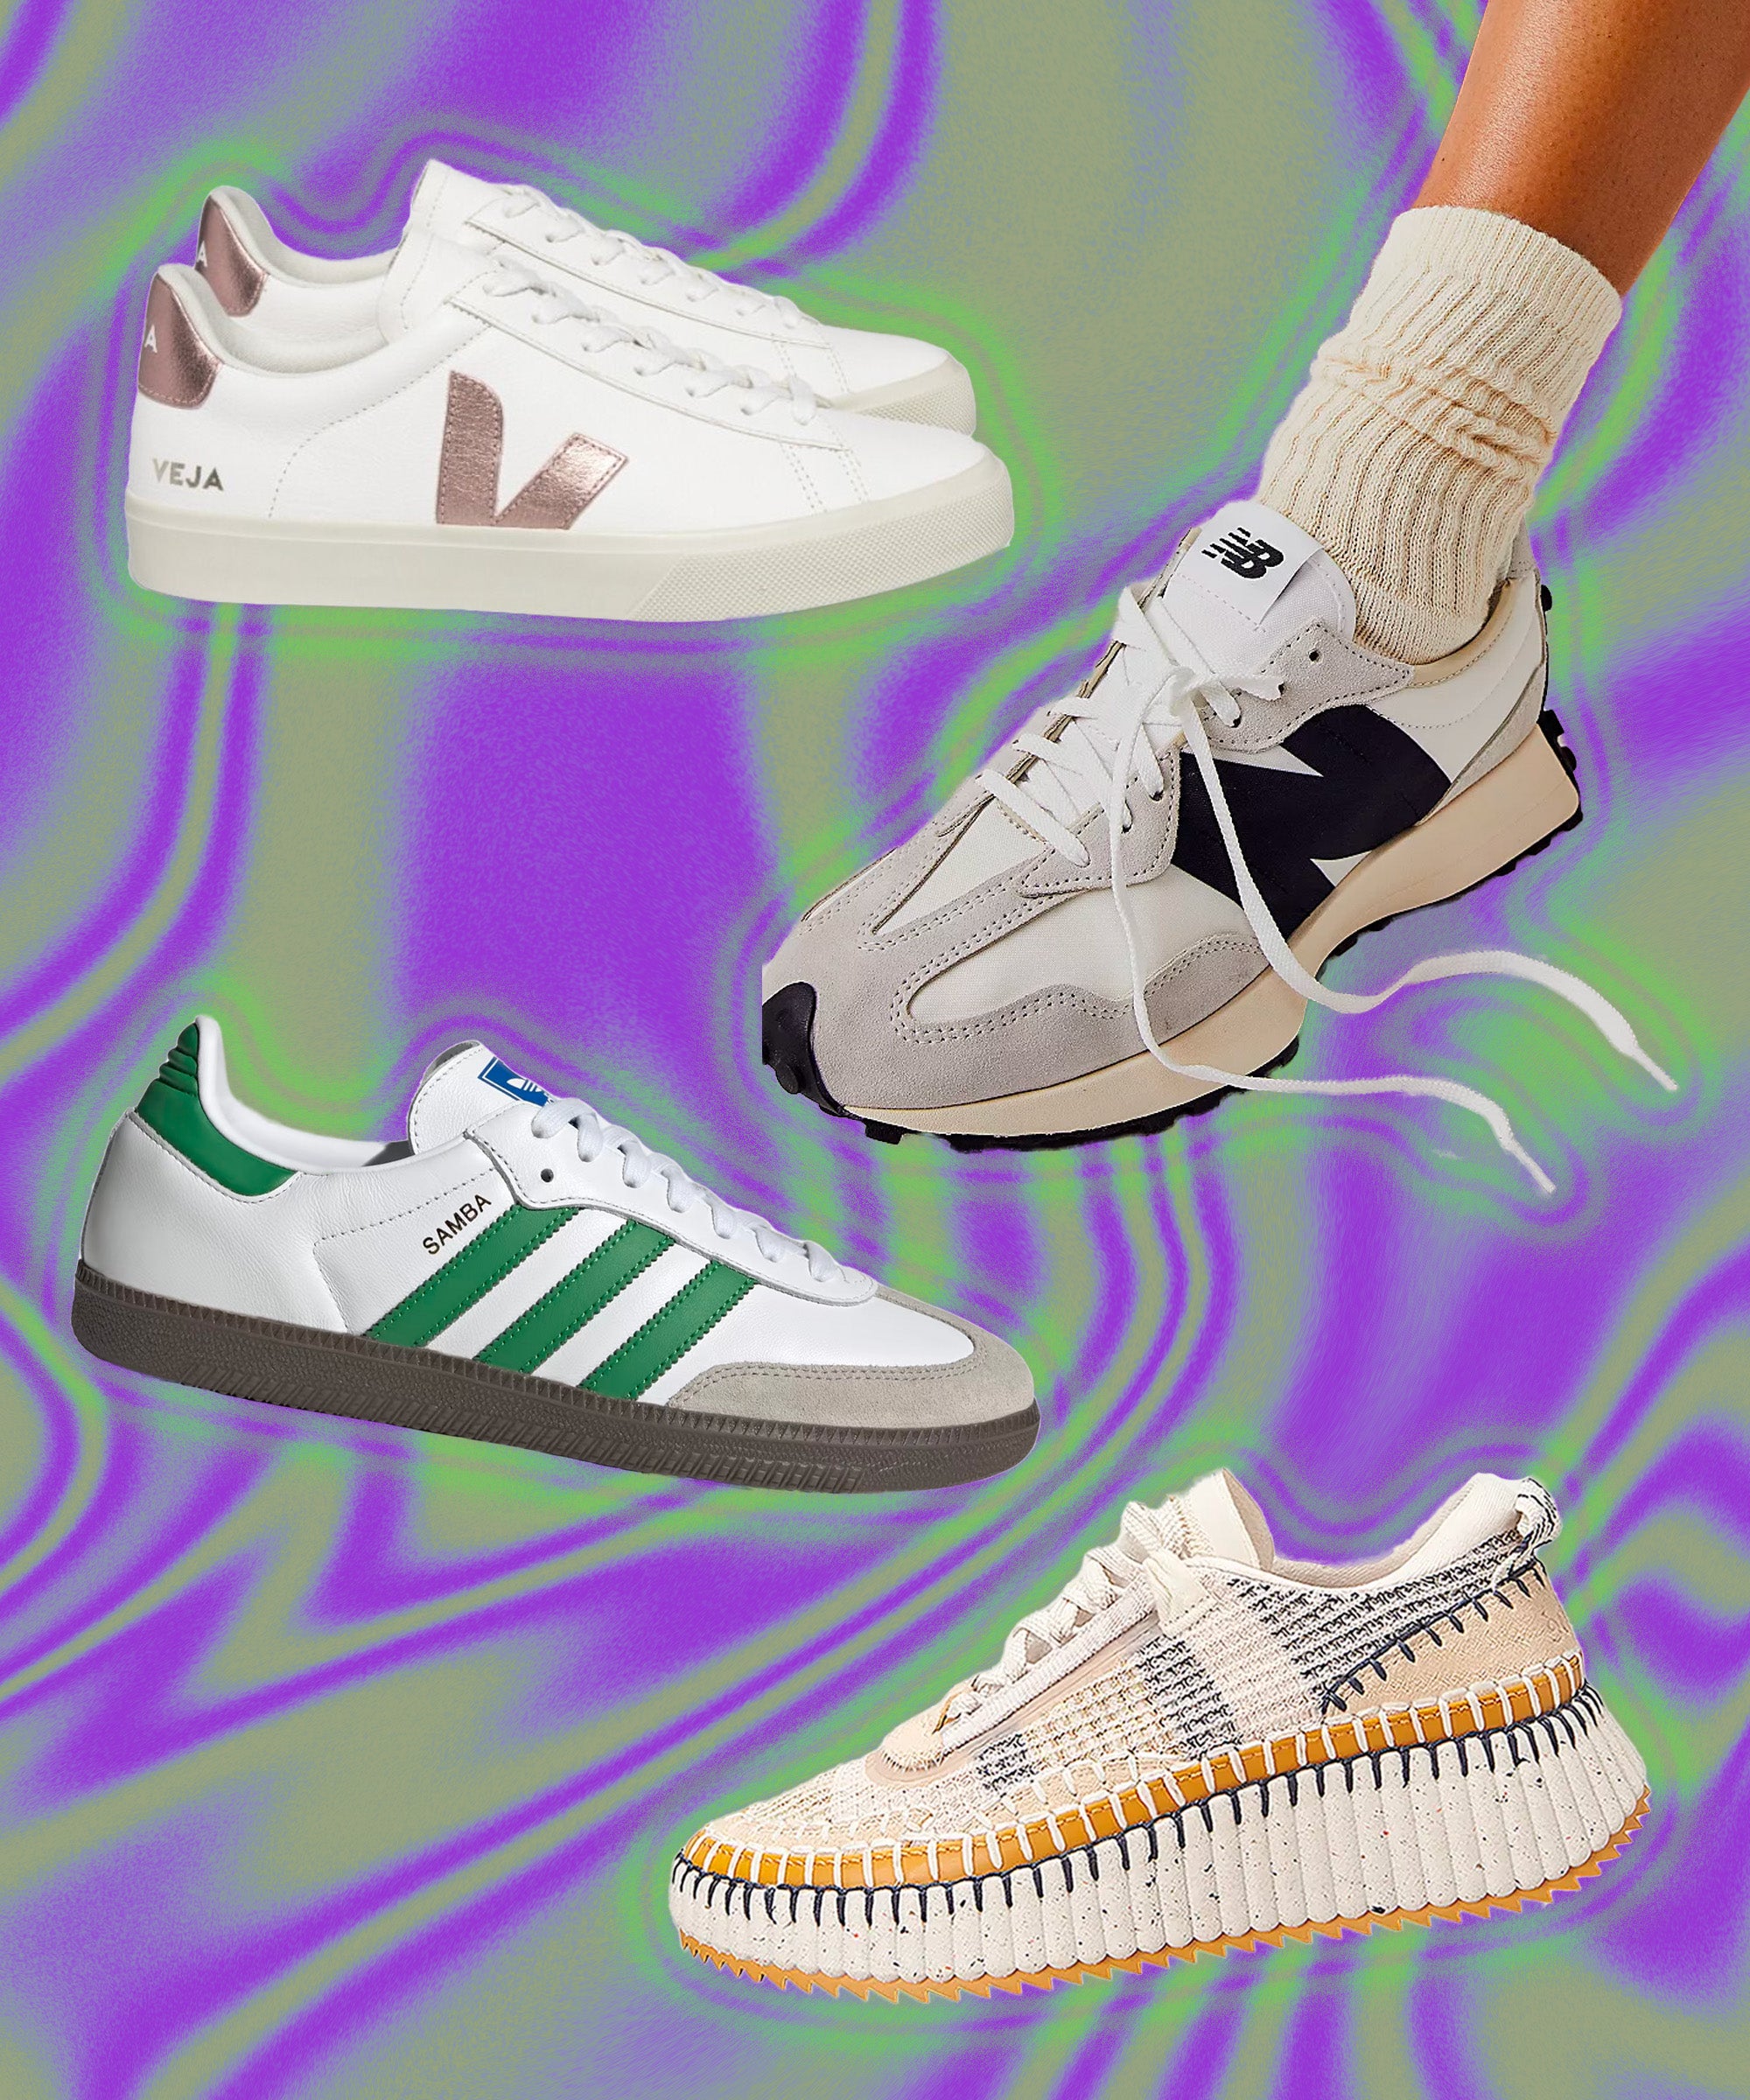 The Best Retro Sneakers: 19 Vintage Kicks That'll Always Be Cool